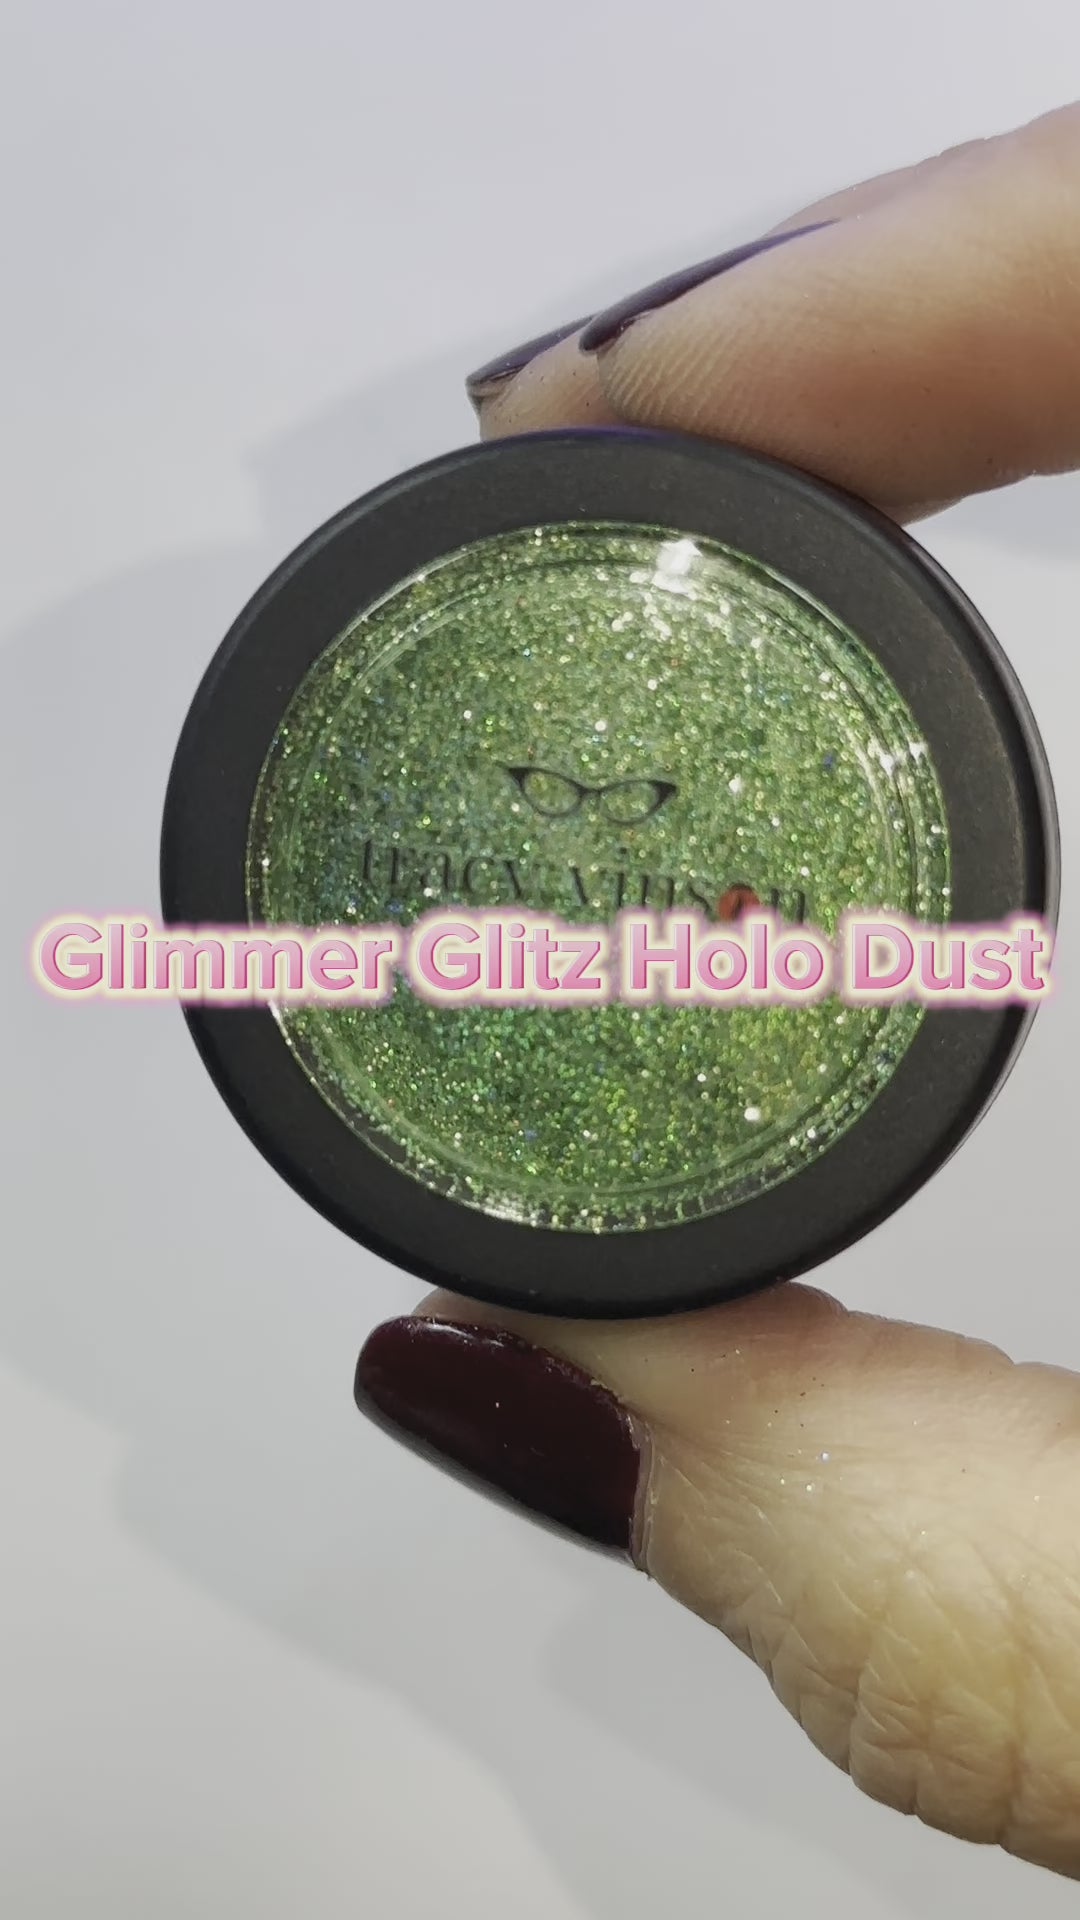 Christmas At Tiffani's Glimmer Glitz Holo Dust FULL Collection